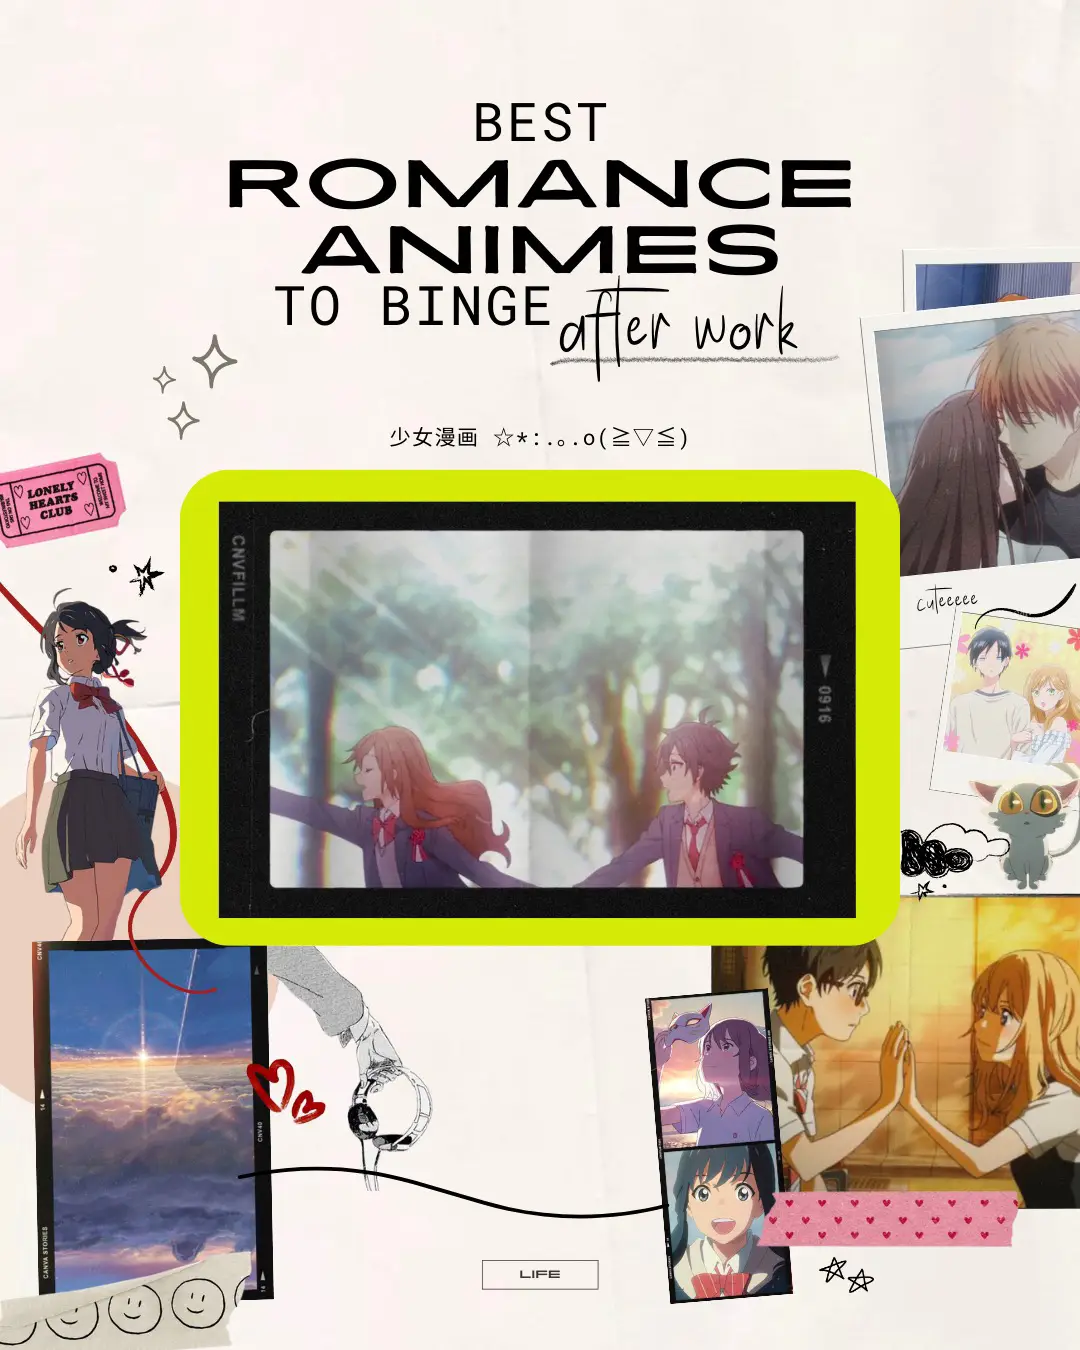 Super Kawaii Romance Animes To Binge Watch! –